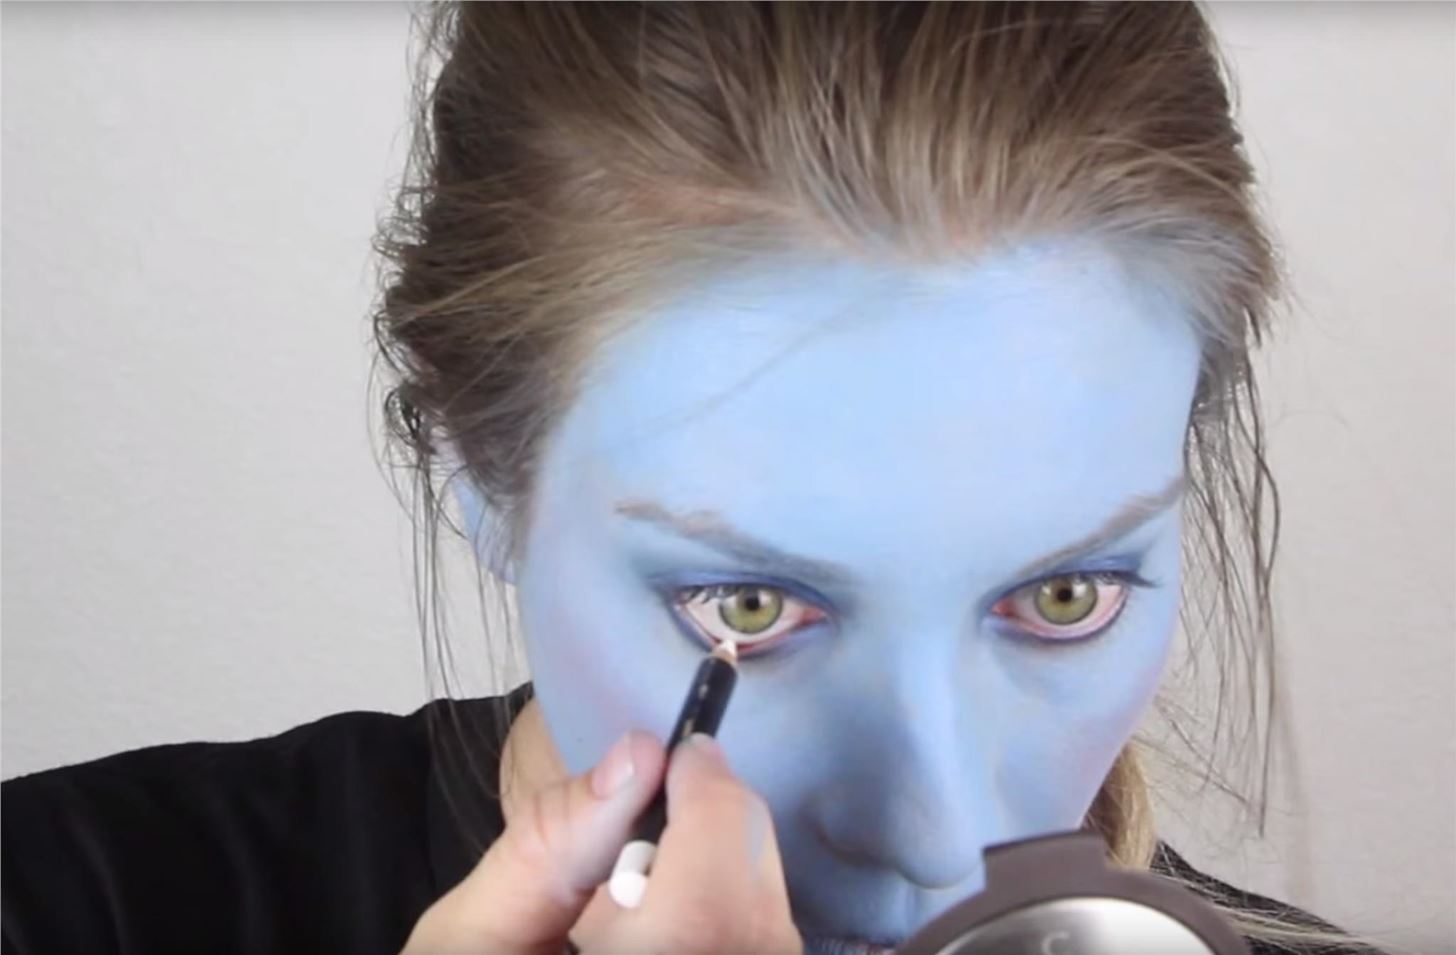 Inside Out: DIY Sadness Costume & Makeup for Halloween